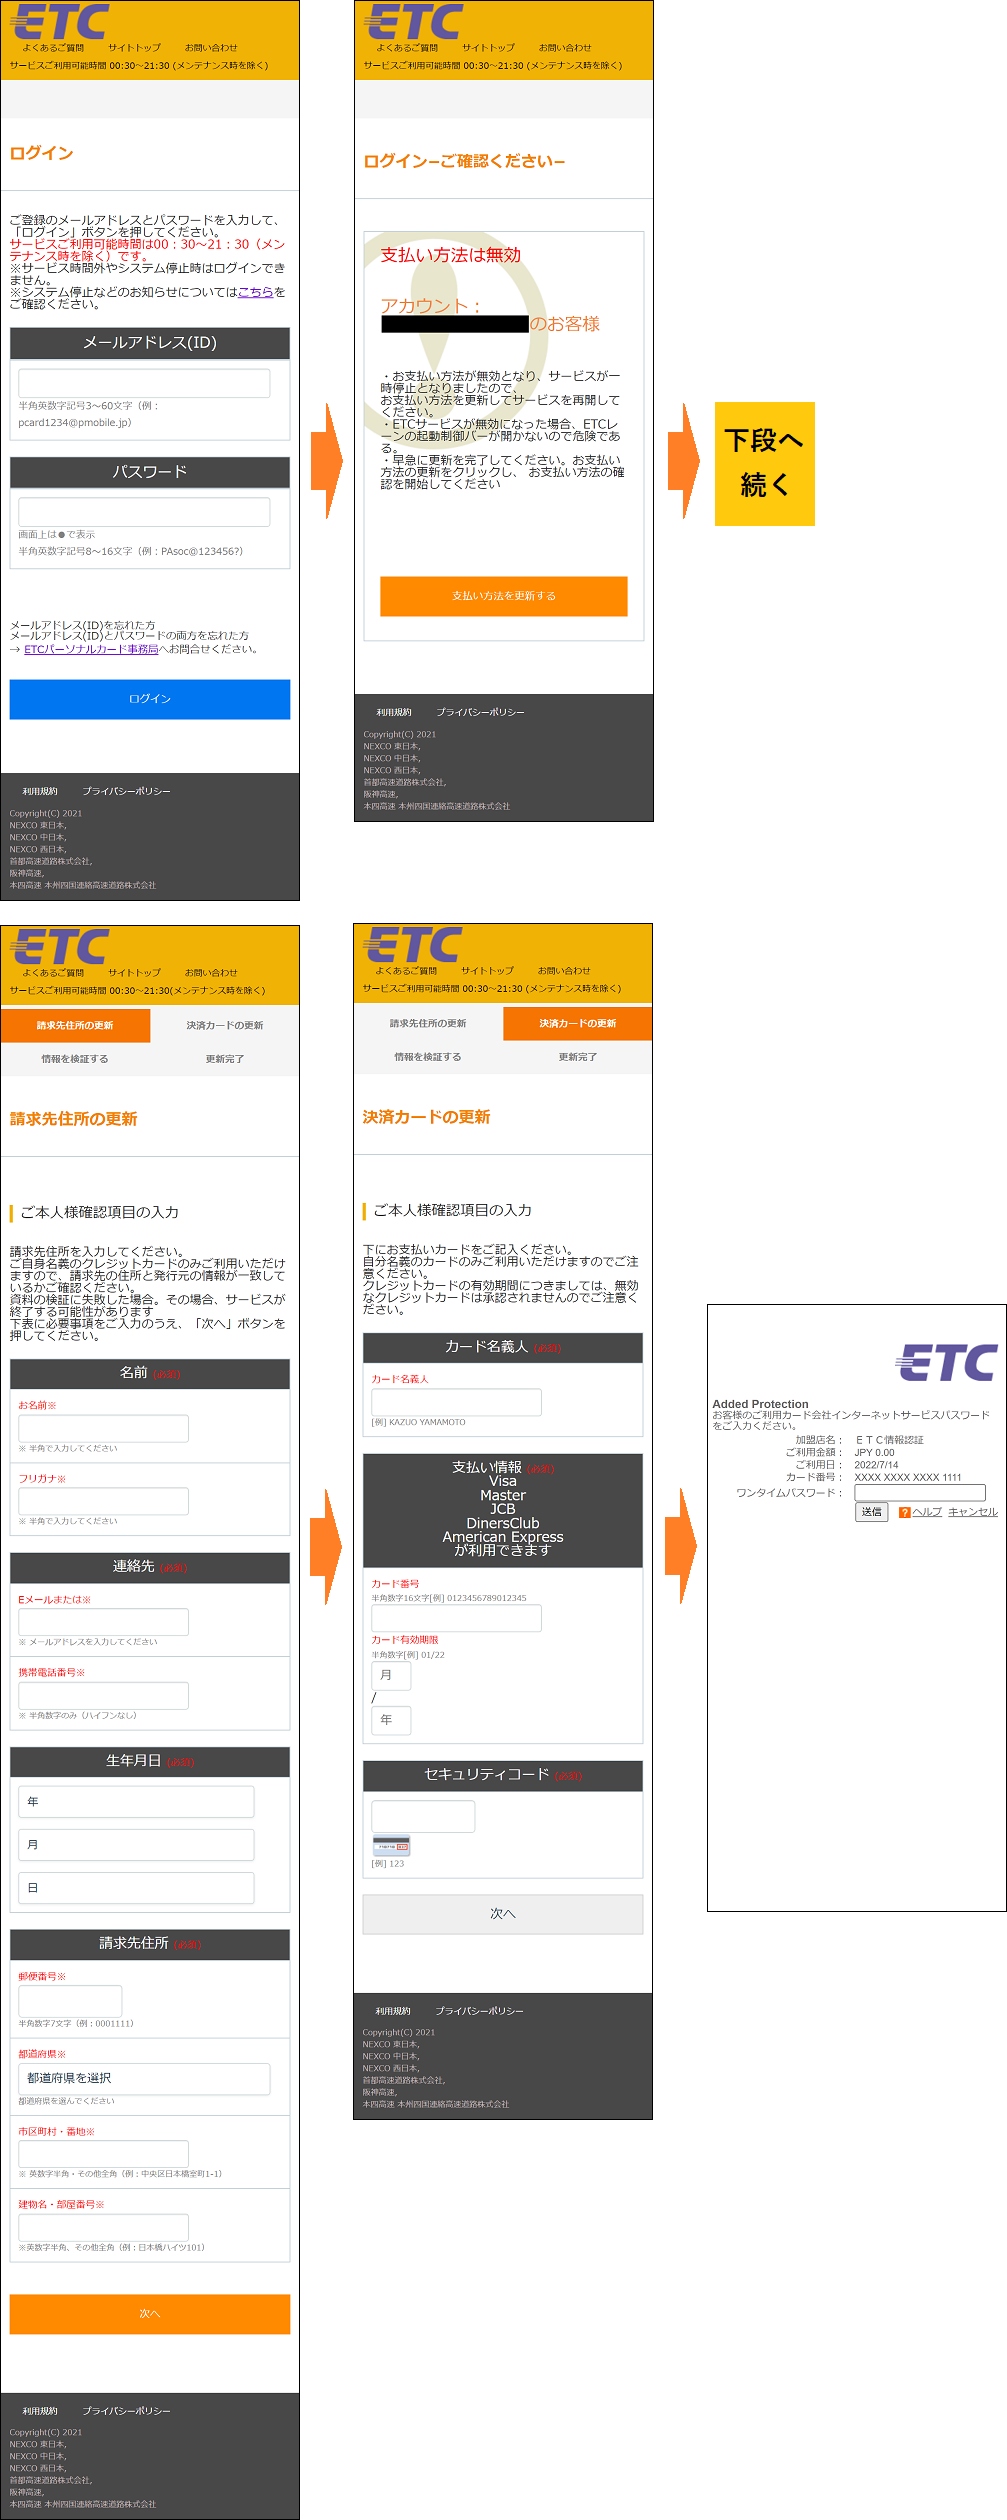 ETC 利用照会サービスかたるフィッシング (2022/07/14)